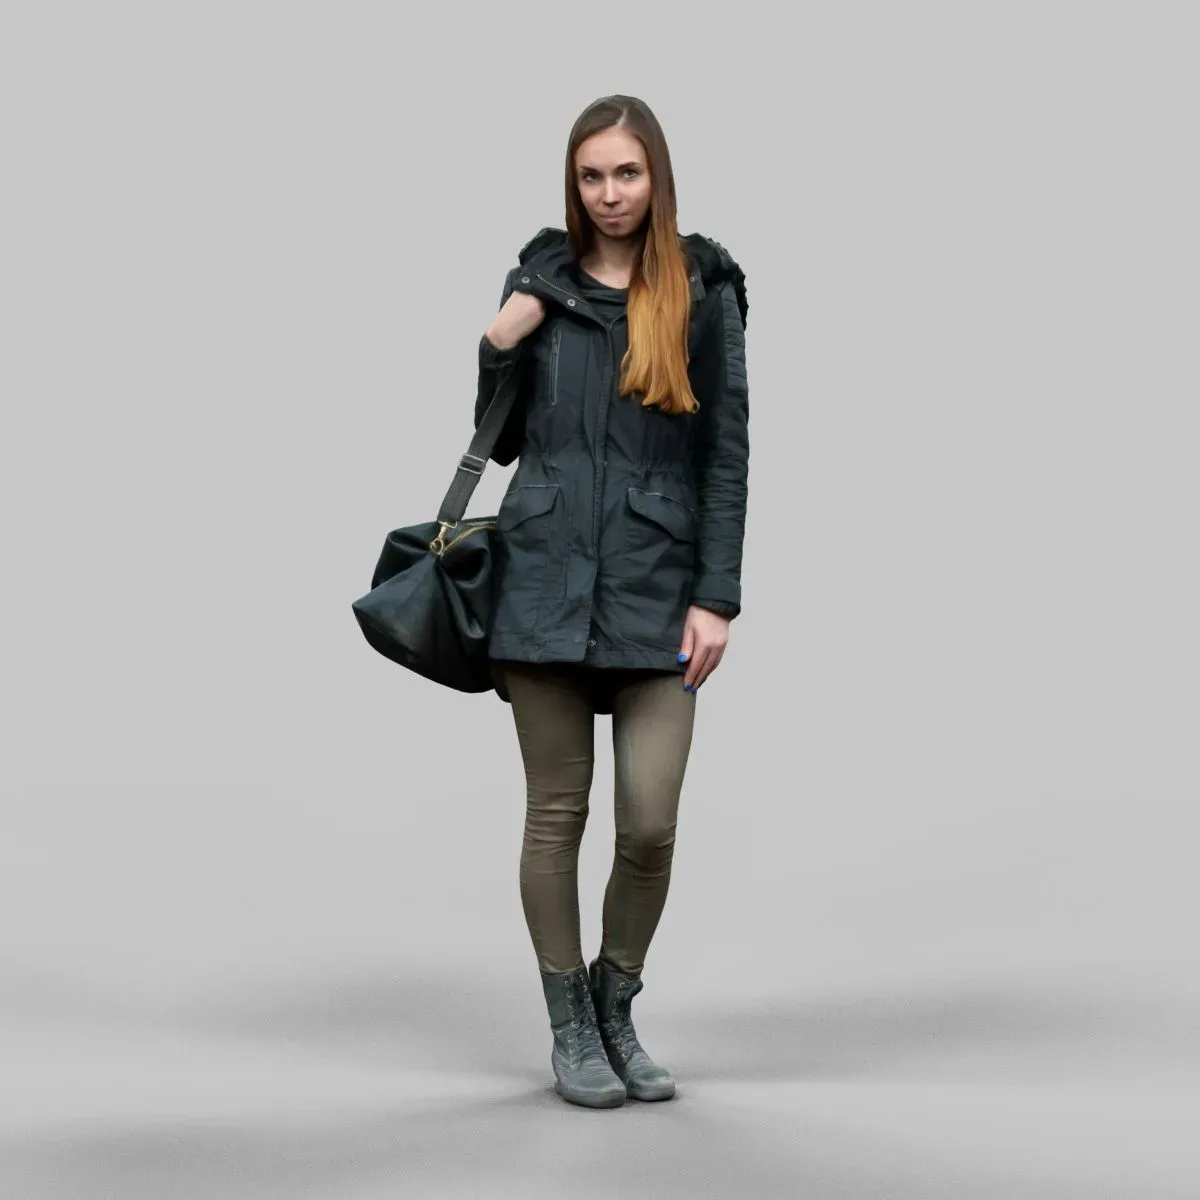 Girl in warm coat wearing bag